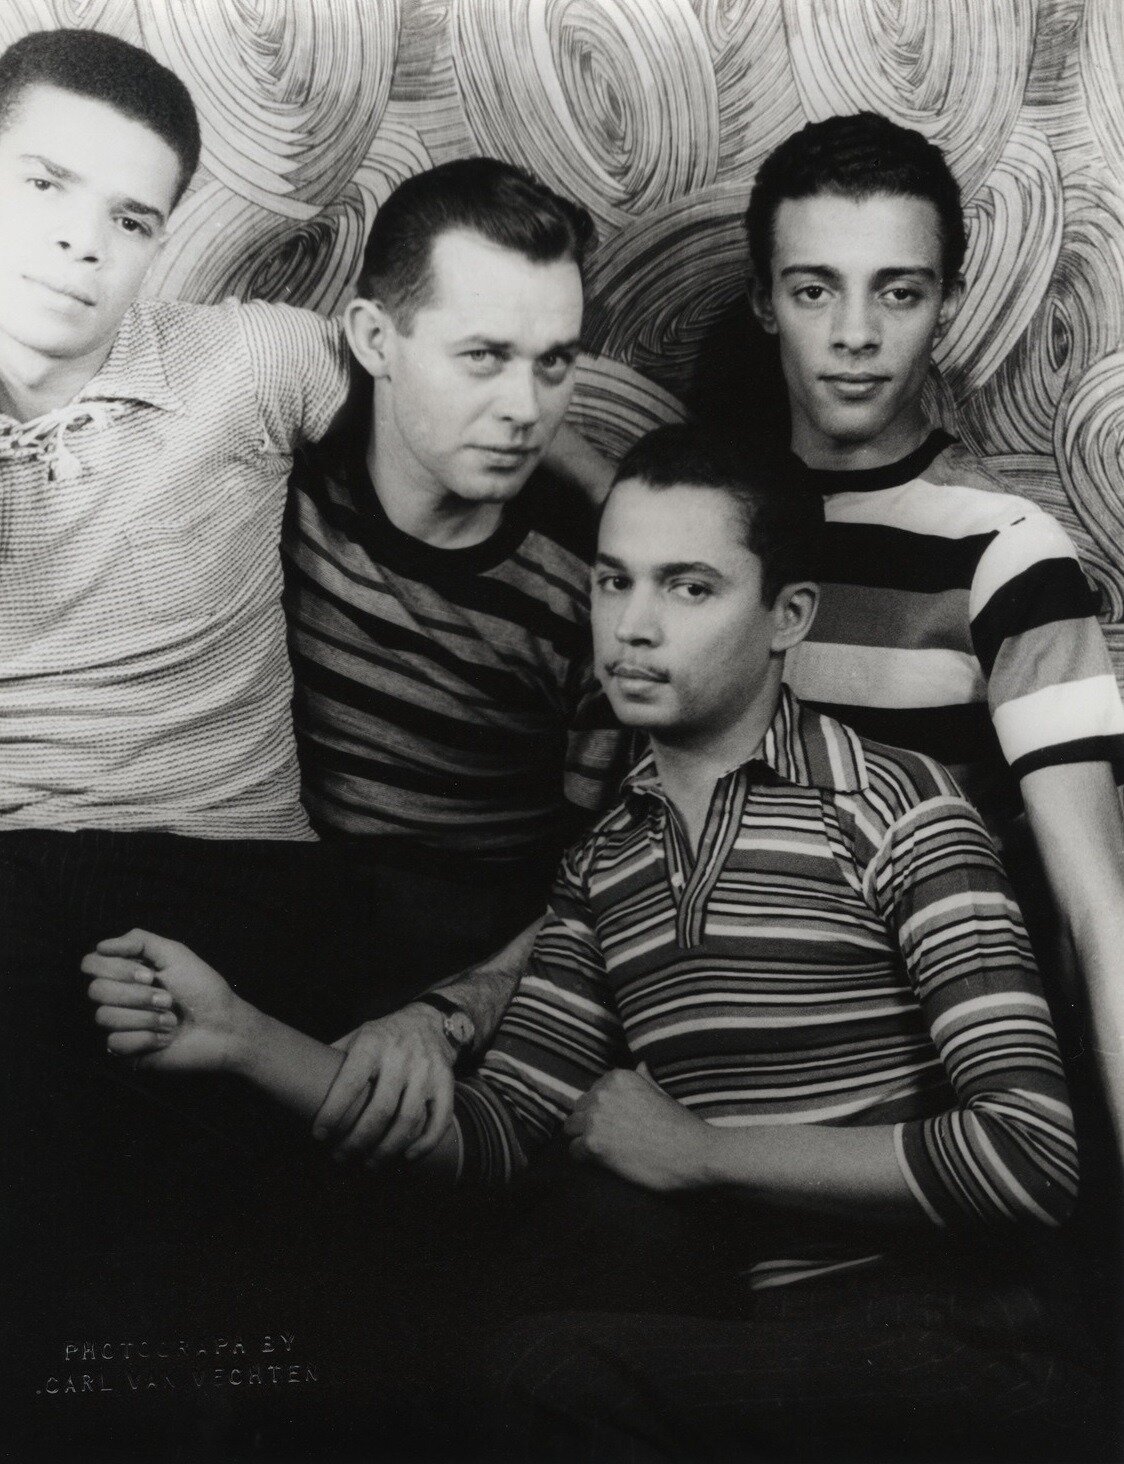  Frank Harriott, Karl Priebe, Edward Atkinson and Tom Kemp, photographed by Carl Van Vechten in 1948. 